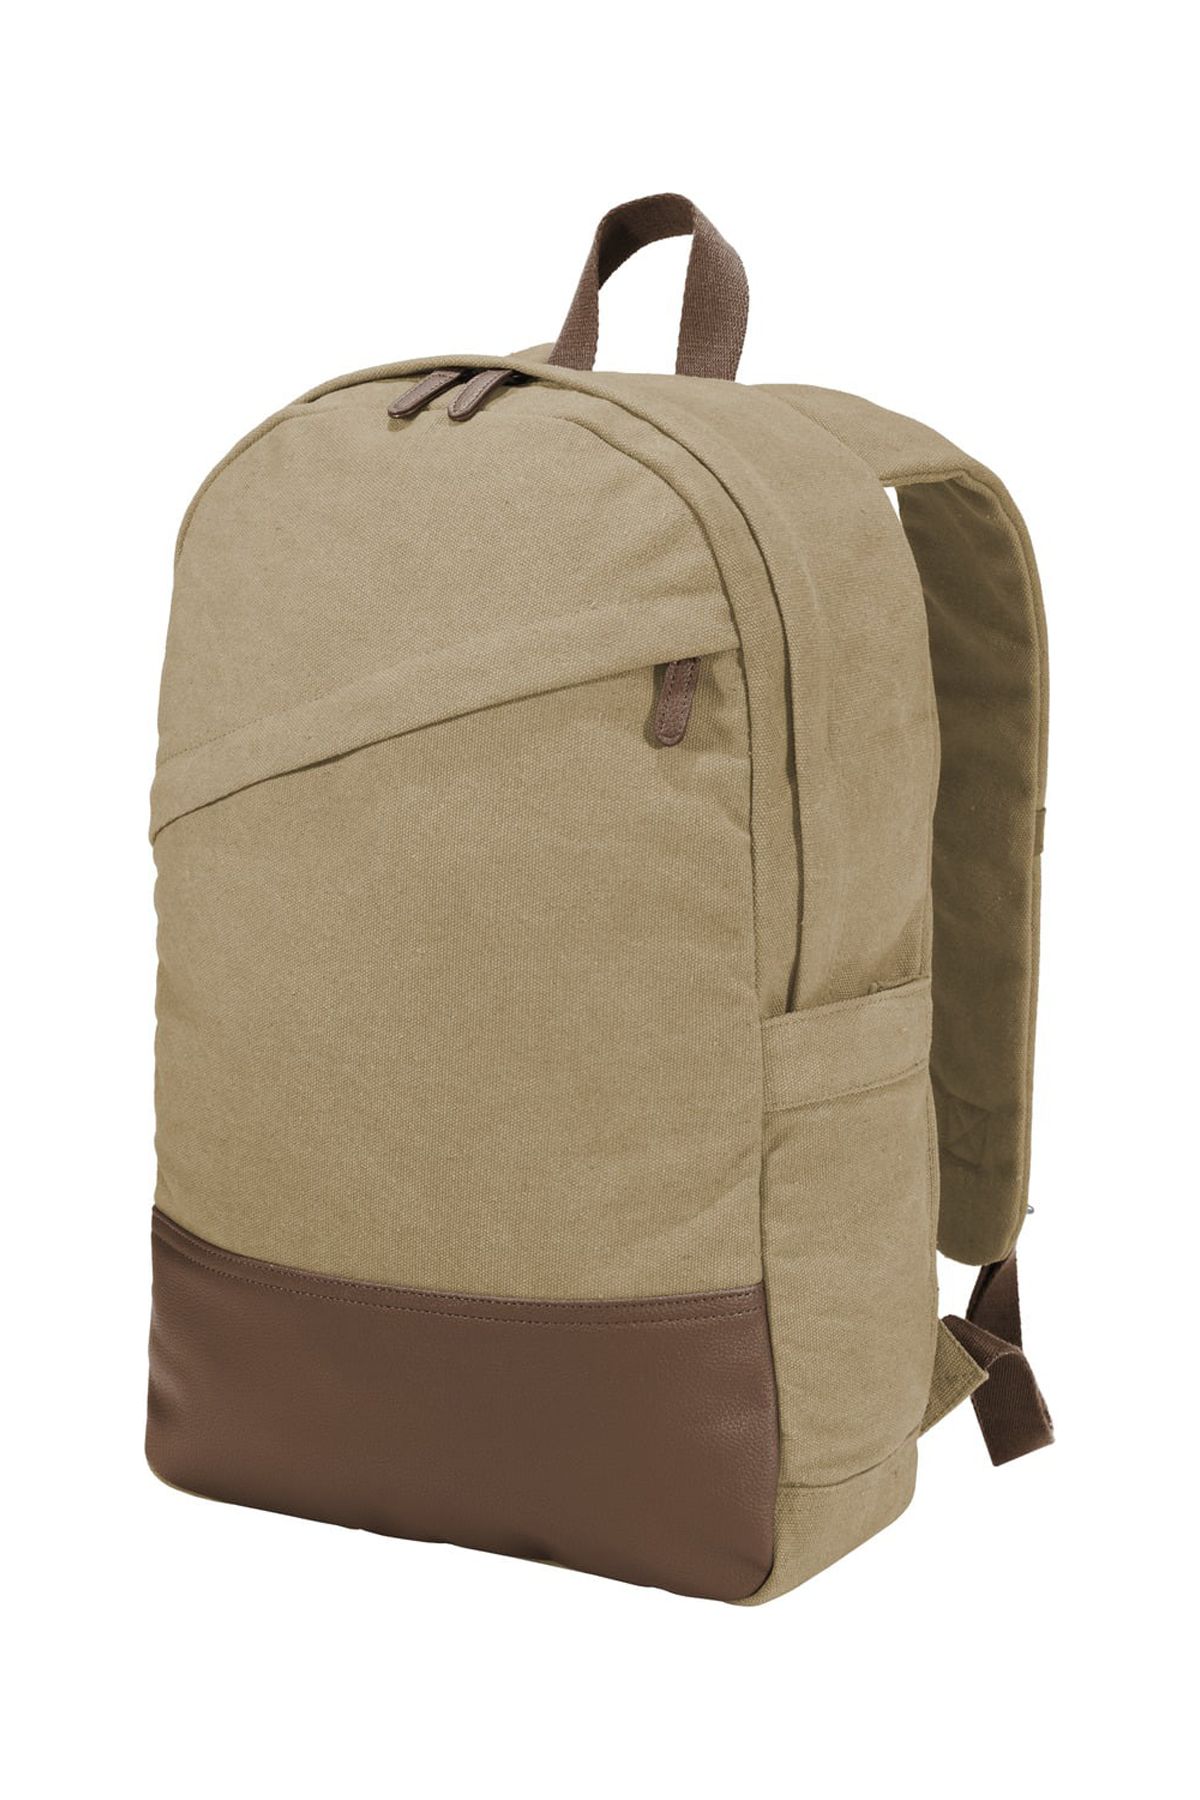 Port Authority Adult Unisex canvas Backpack Desert Khaki One Size Fits All - image 1 of 3